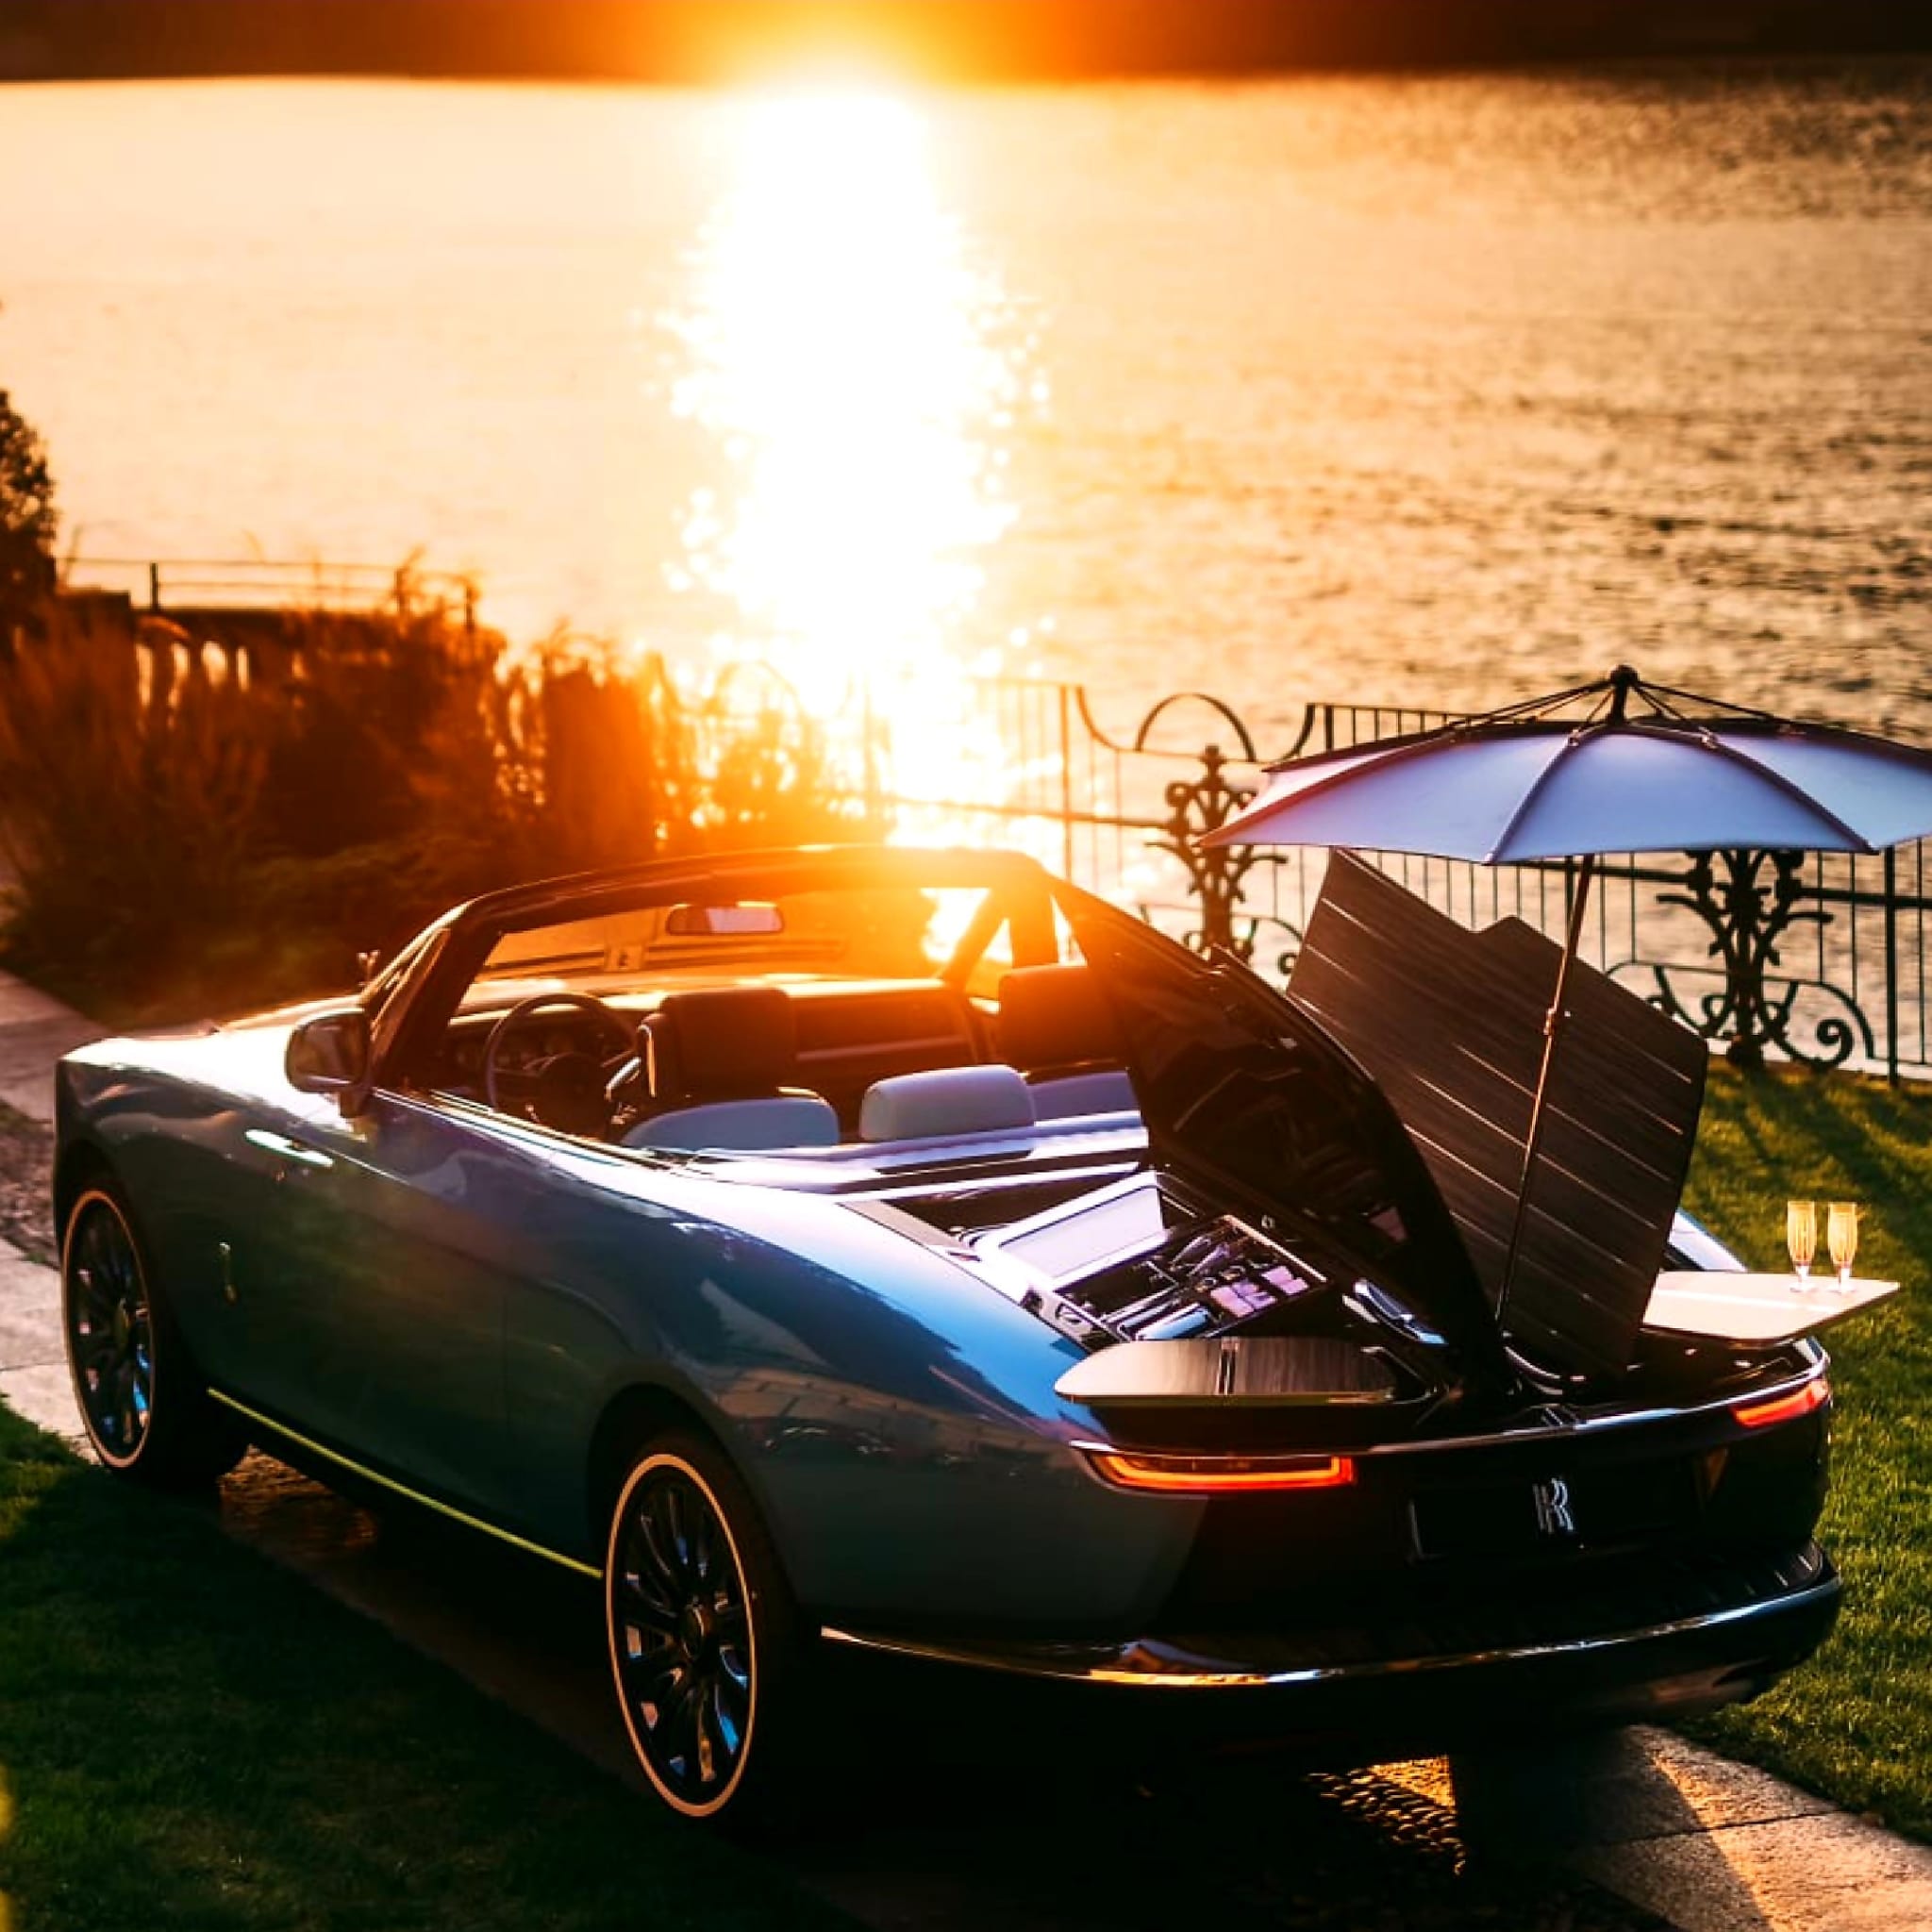 Rolls Royce sunset